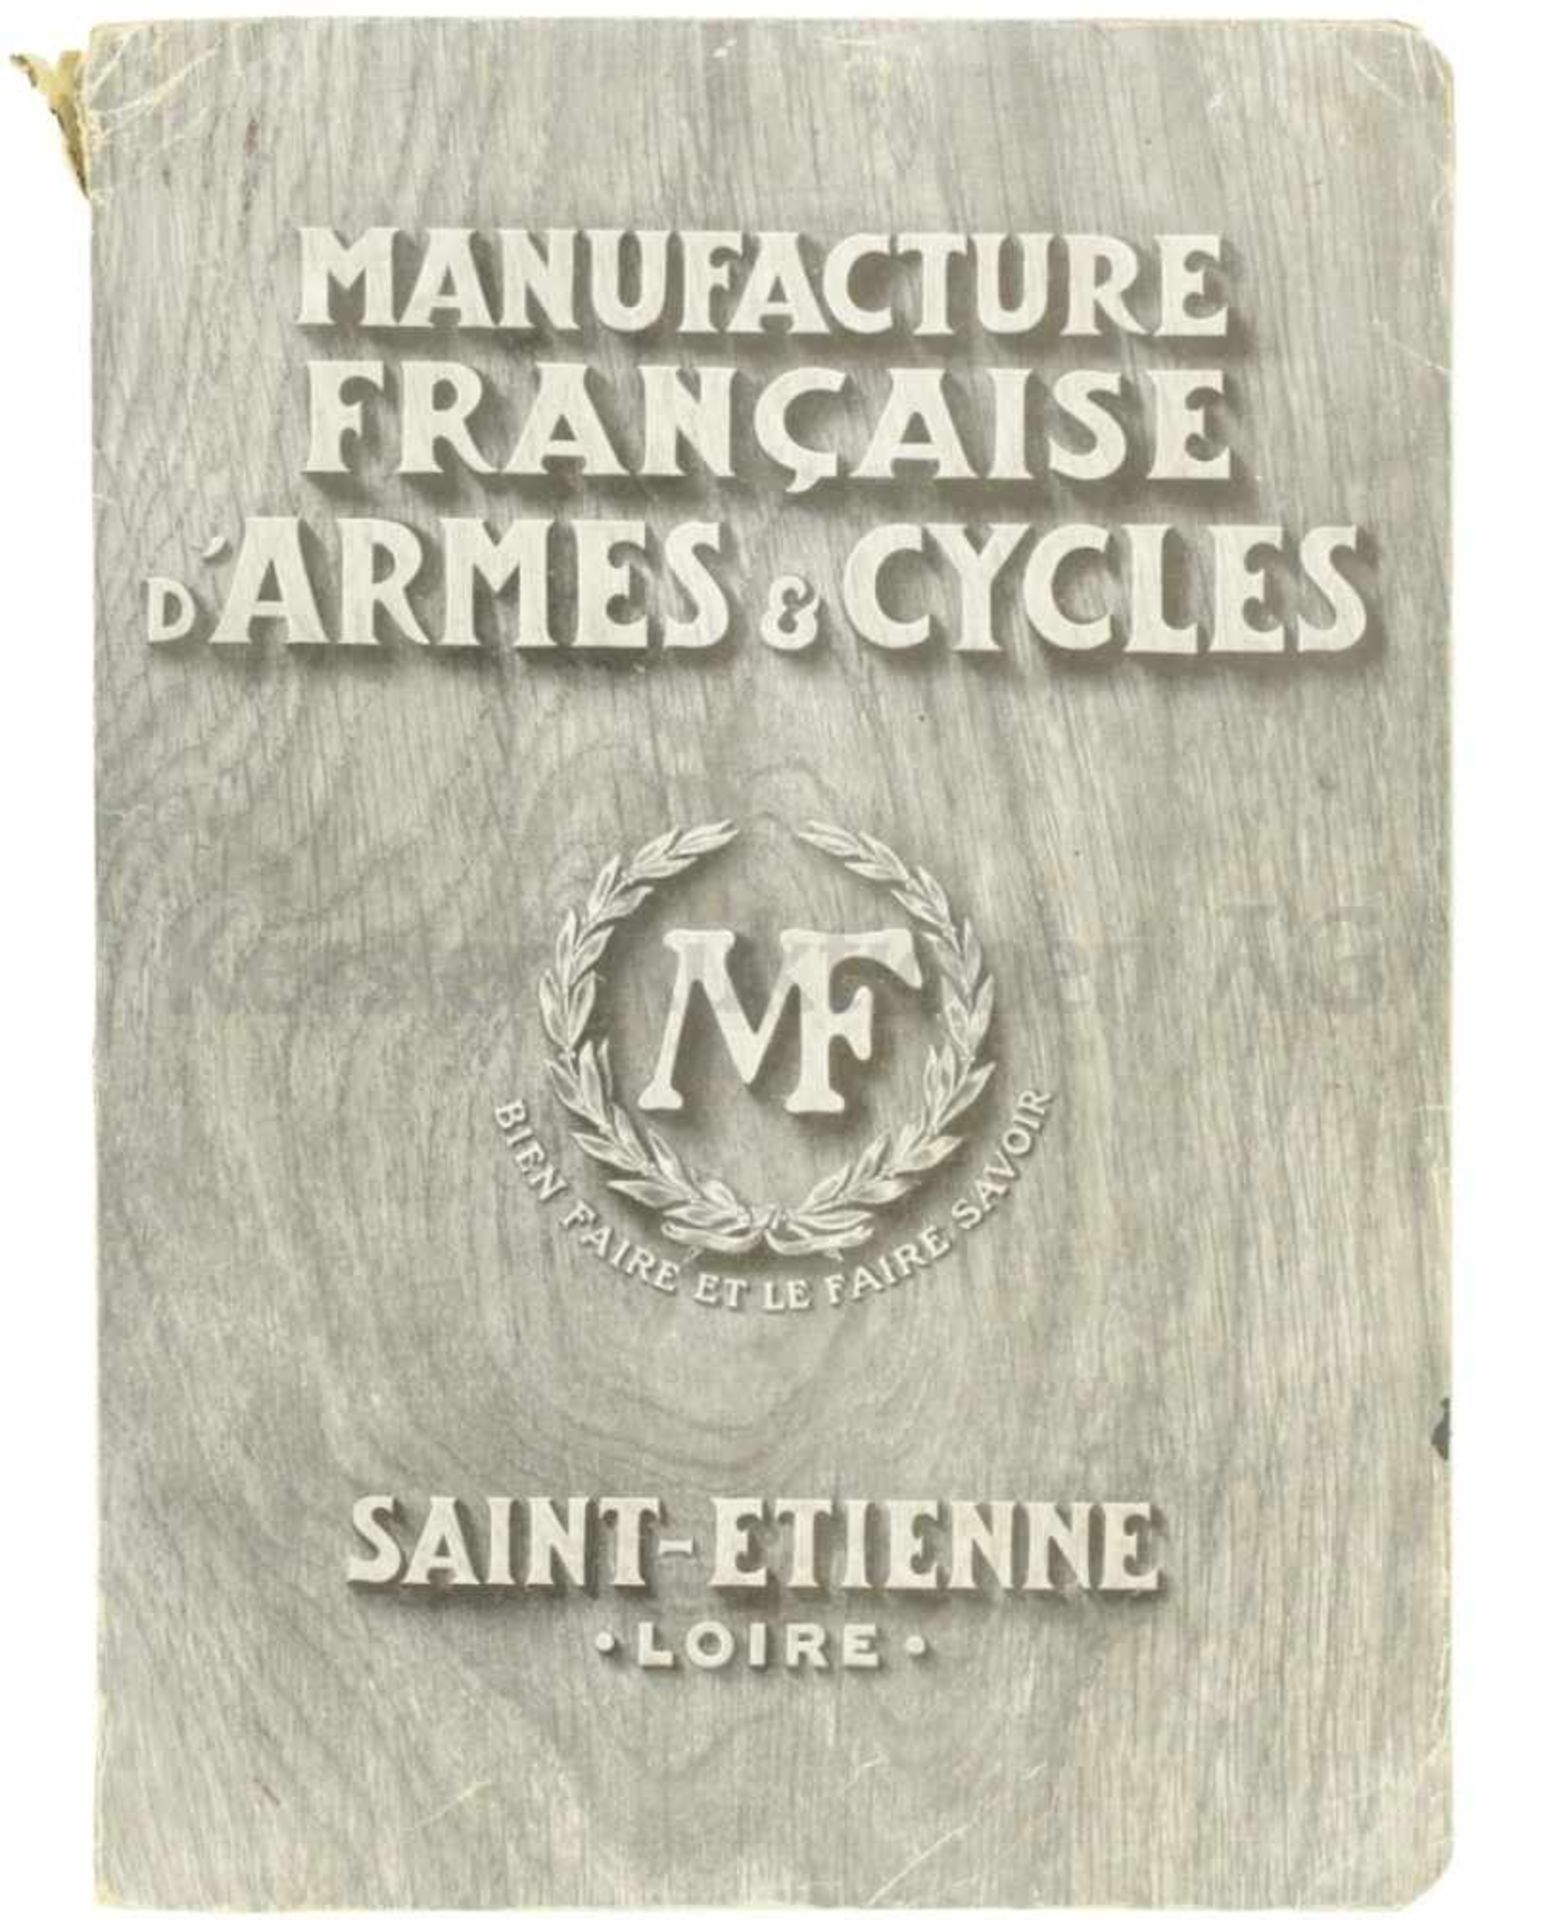 Katalog "Manufacture Francaise d'Armes & Cycles" Der aus der Zeit um 1920 stammende Katalog zeigt